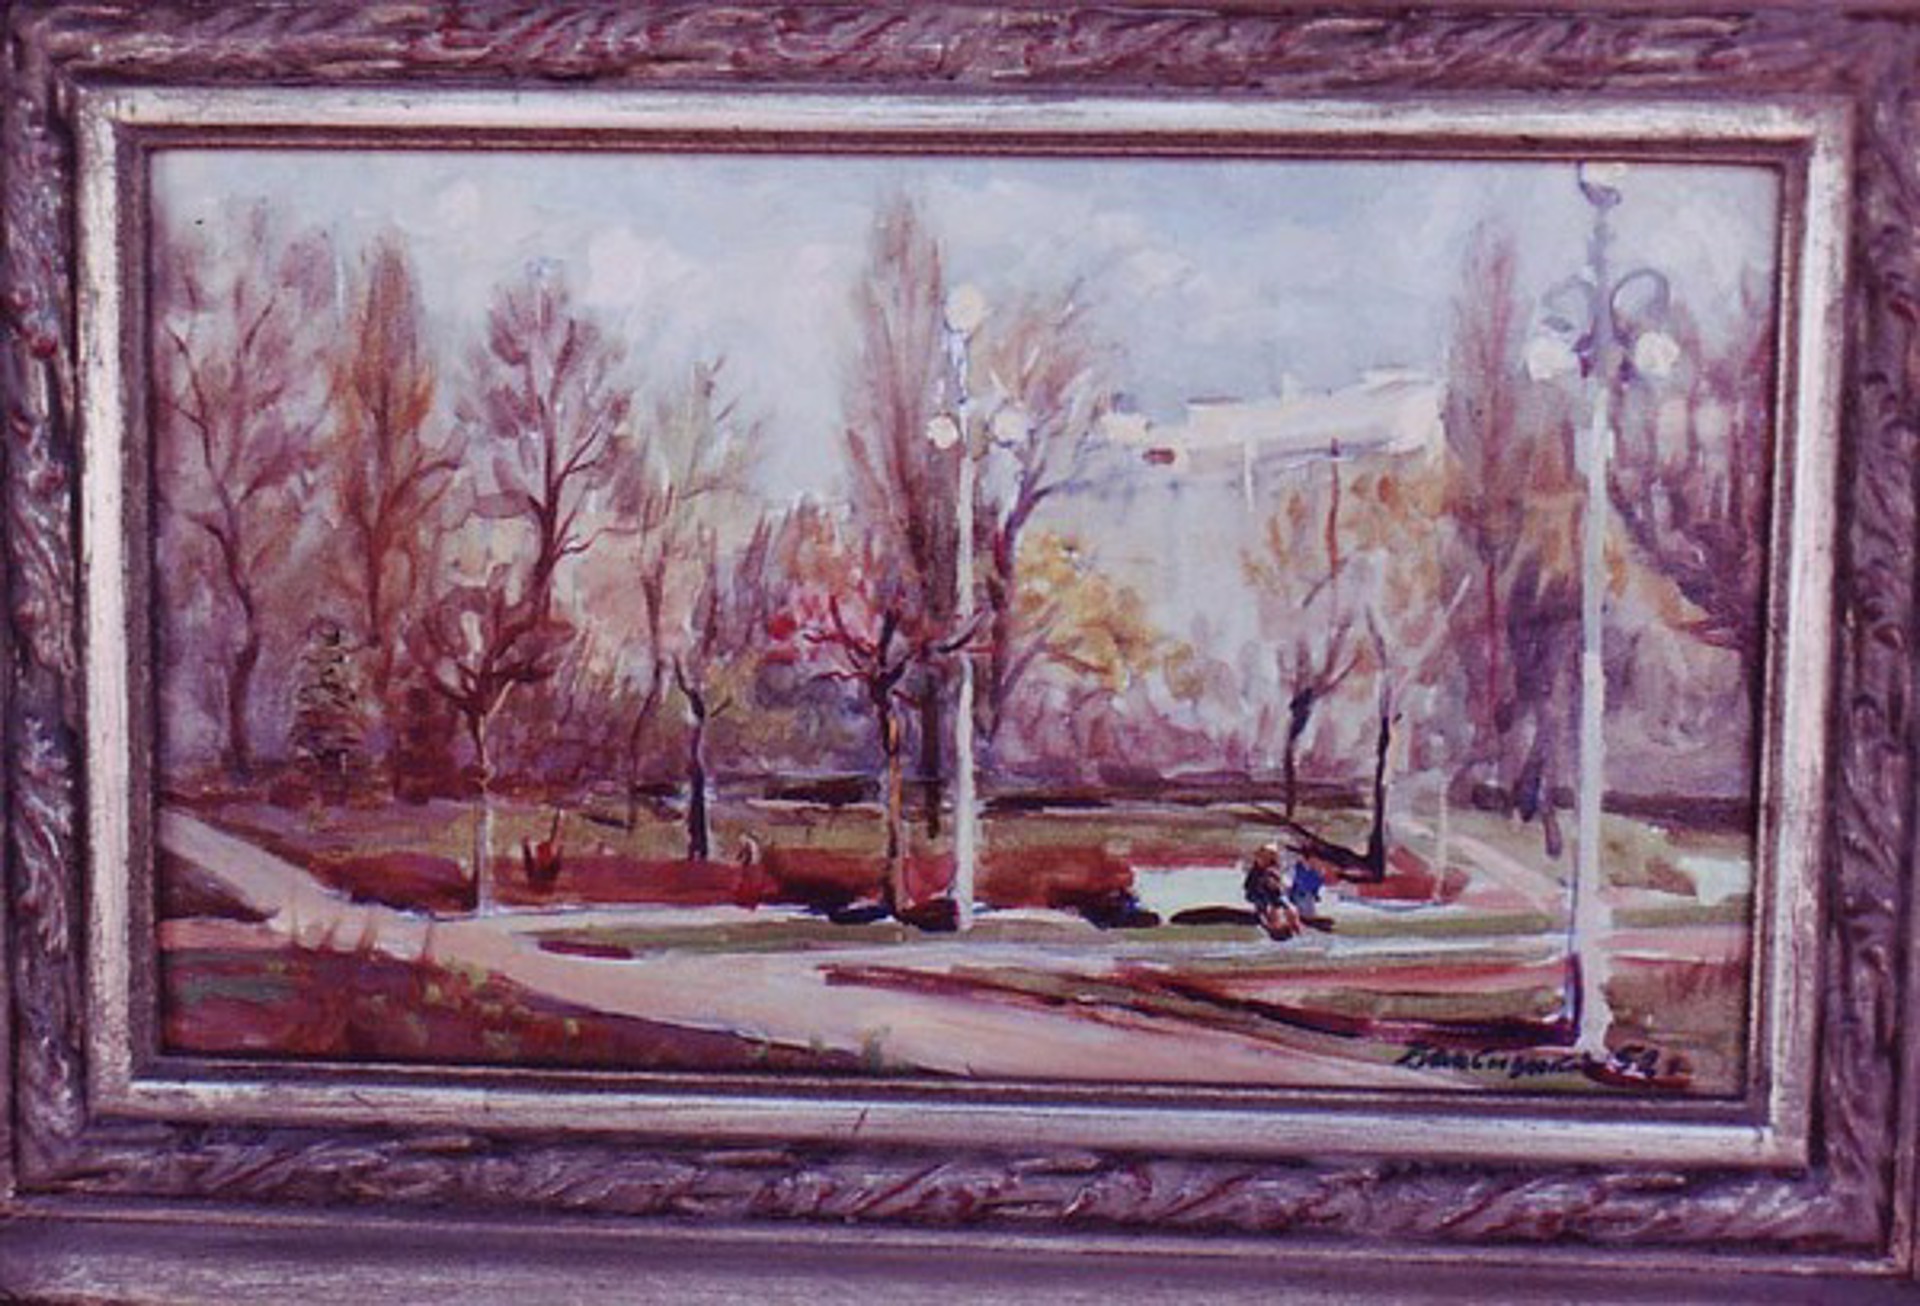 In Shevchenko Park by Valentin Sizikov